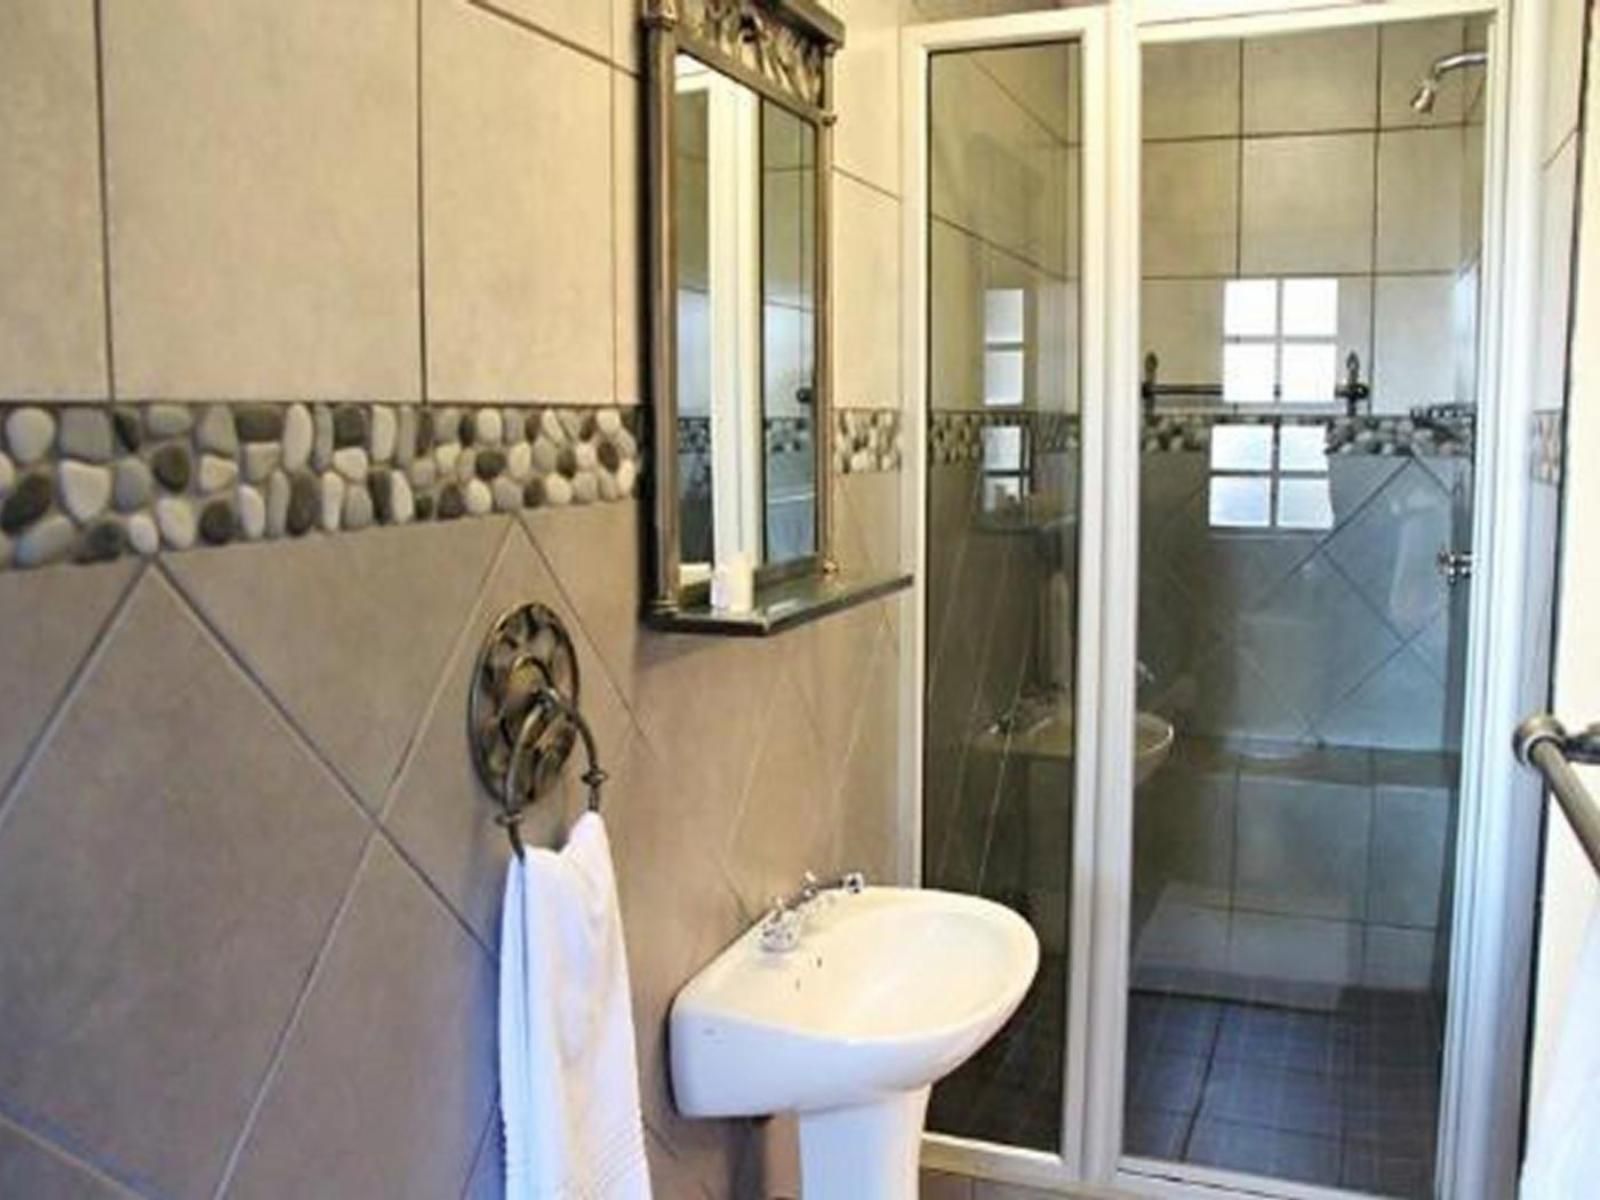 Greenleaf Guest Lodge Universitas Bloemfontein Free State South Africa Bathroom